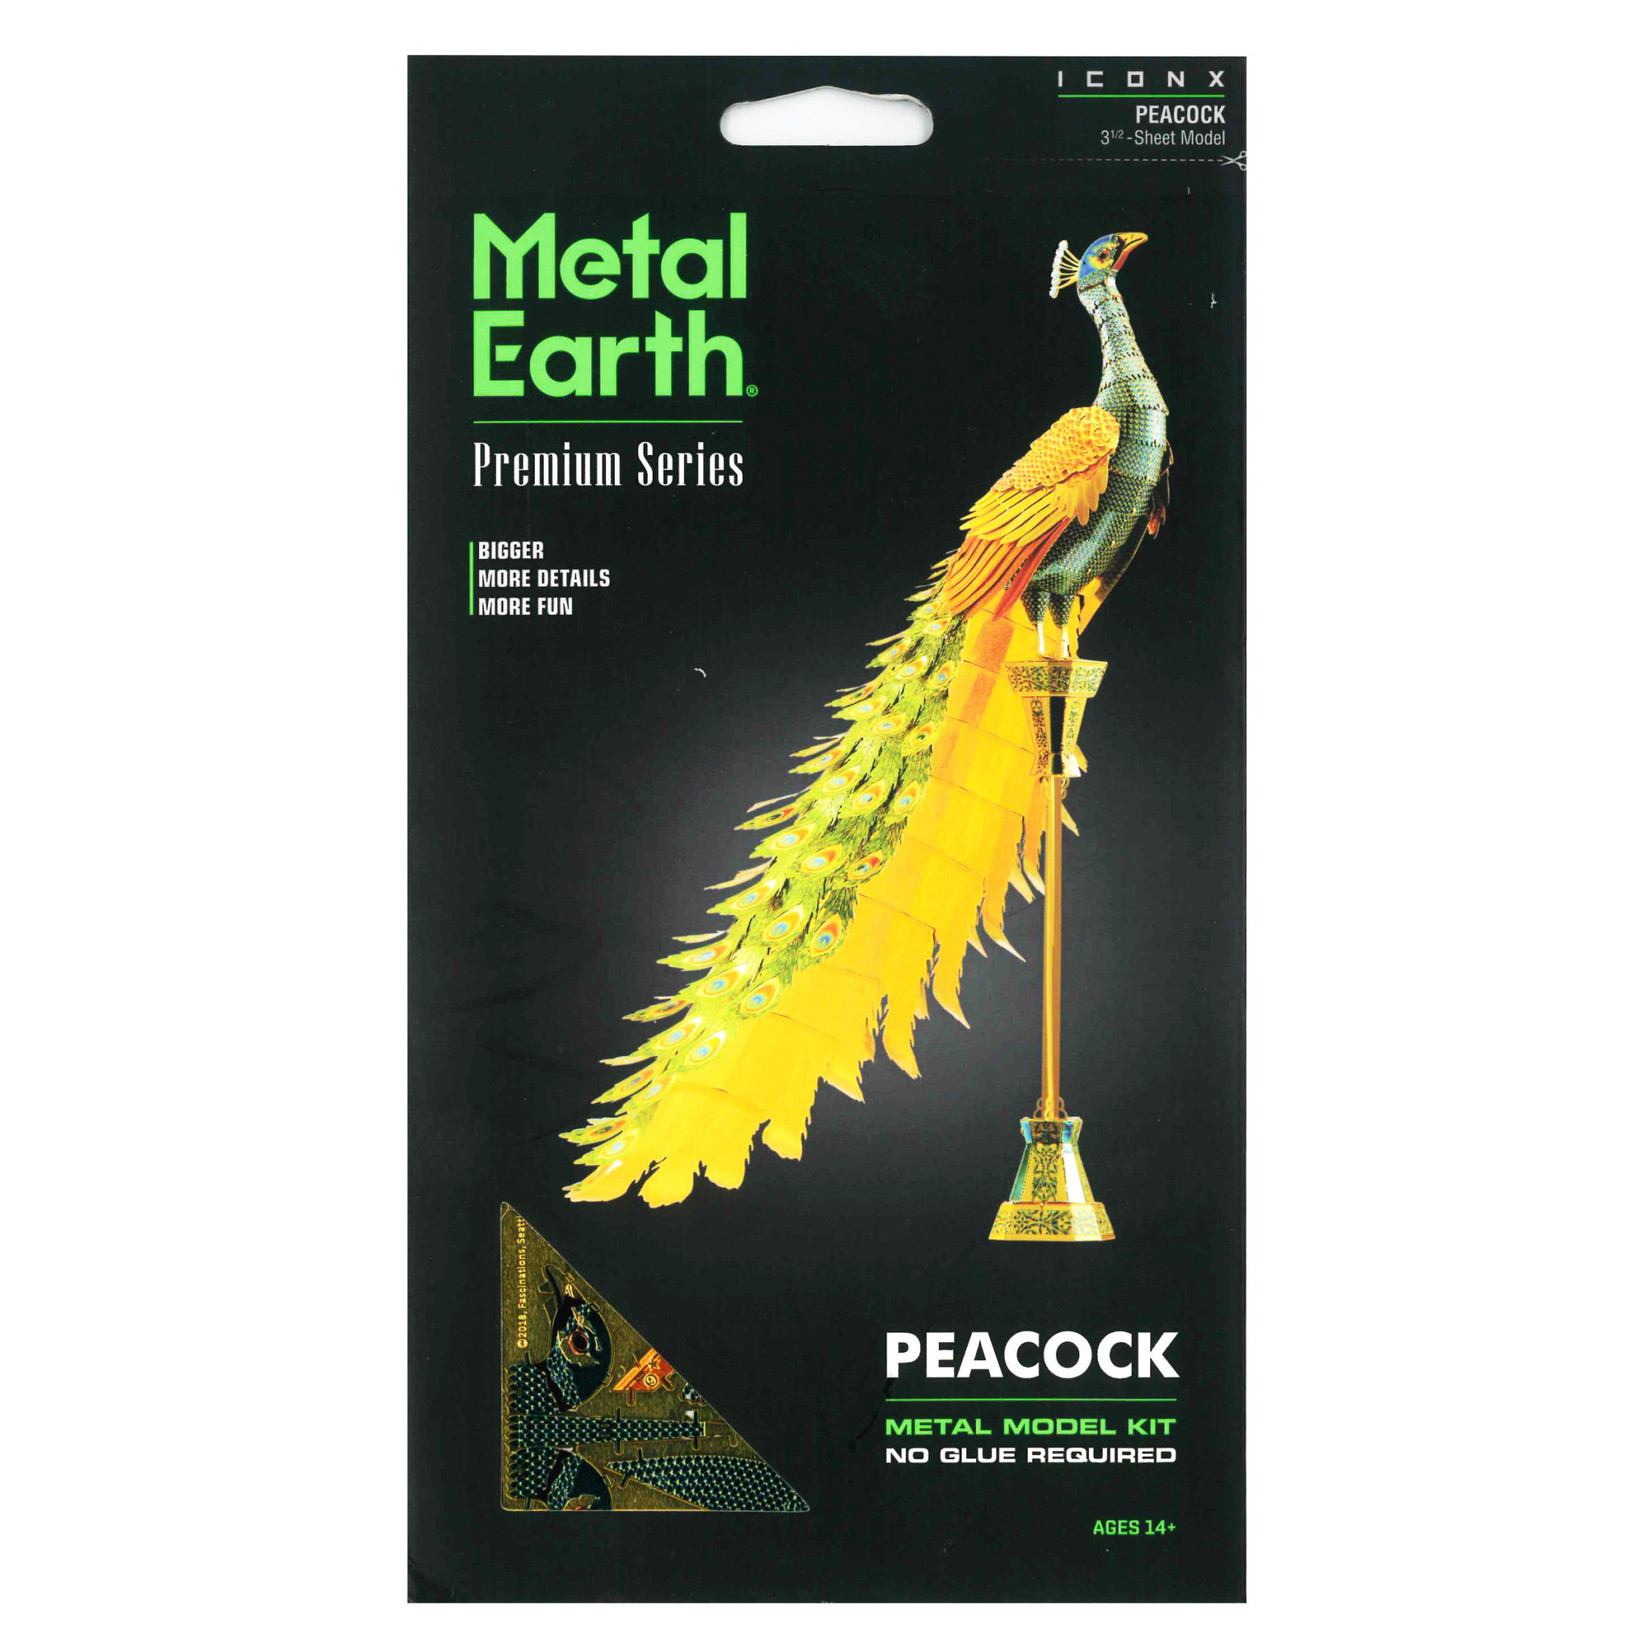 Metal Earth Peacock